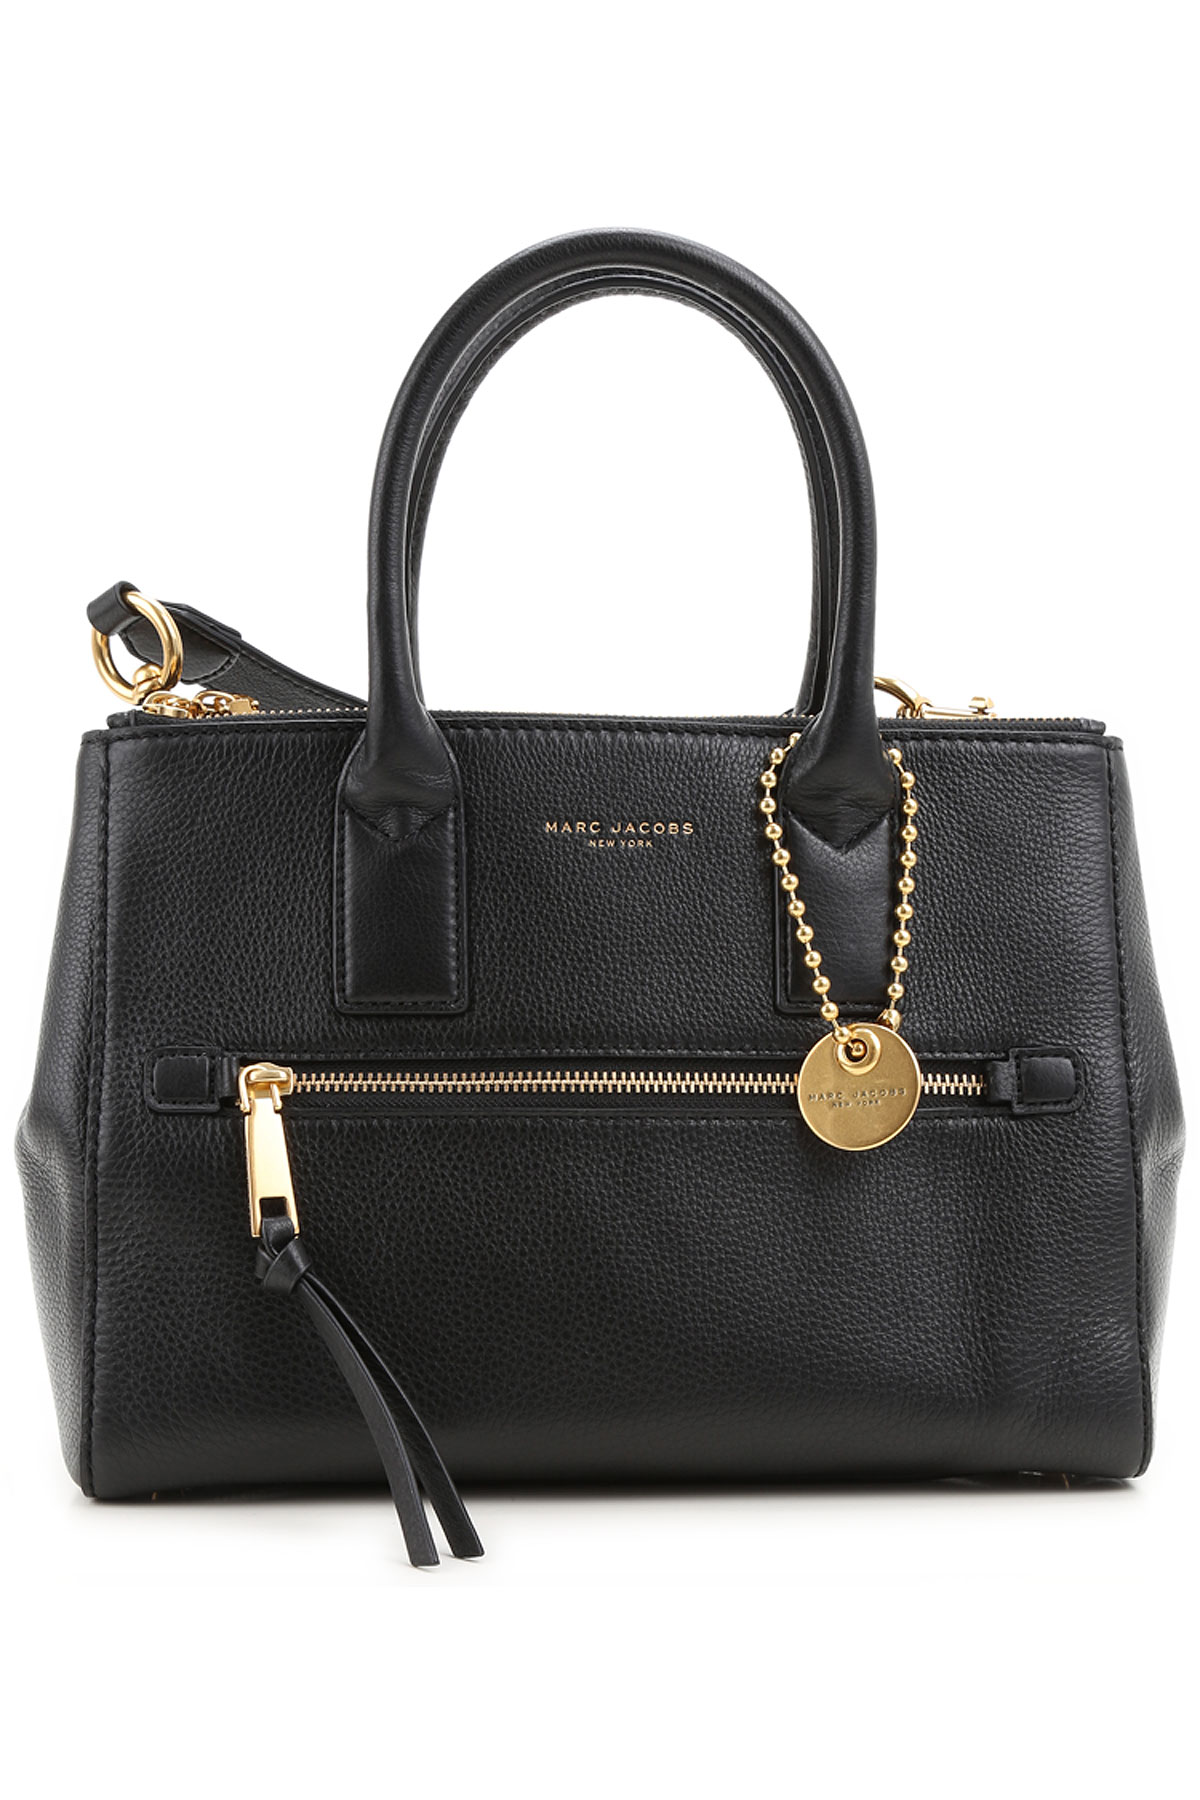 Marc Jacobs Women Handbags | Paul Smith